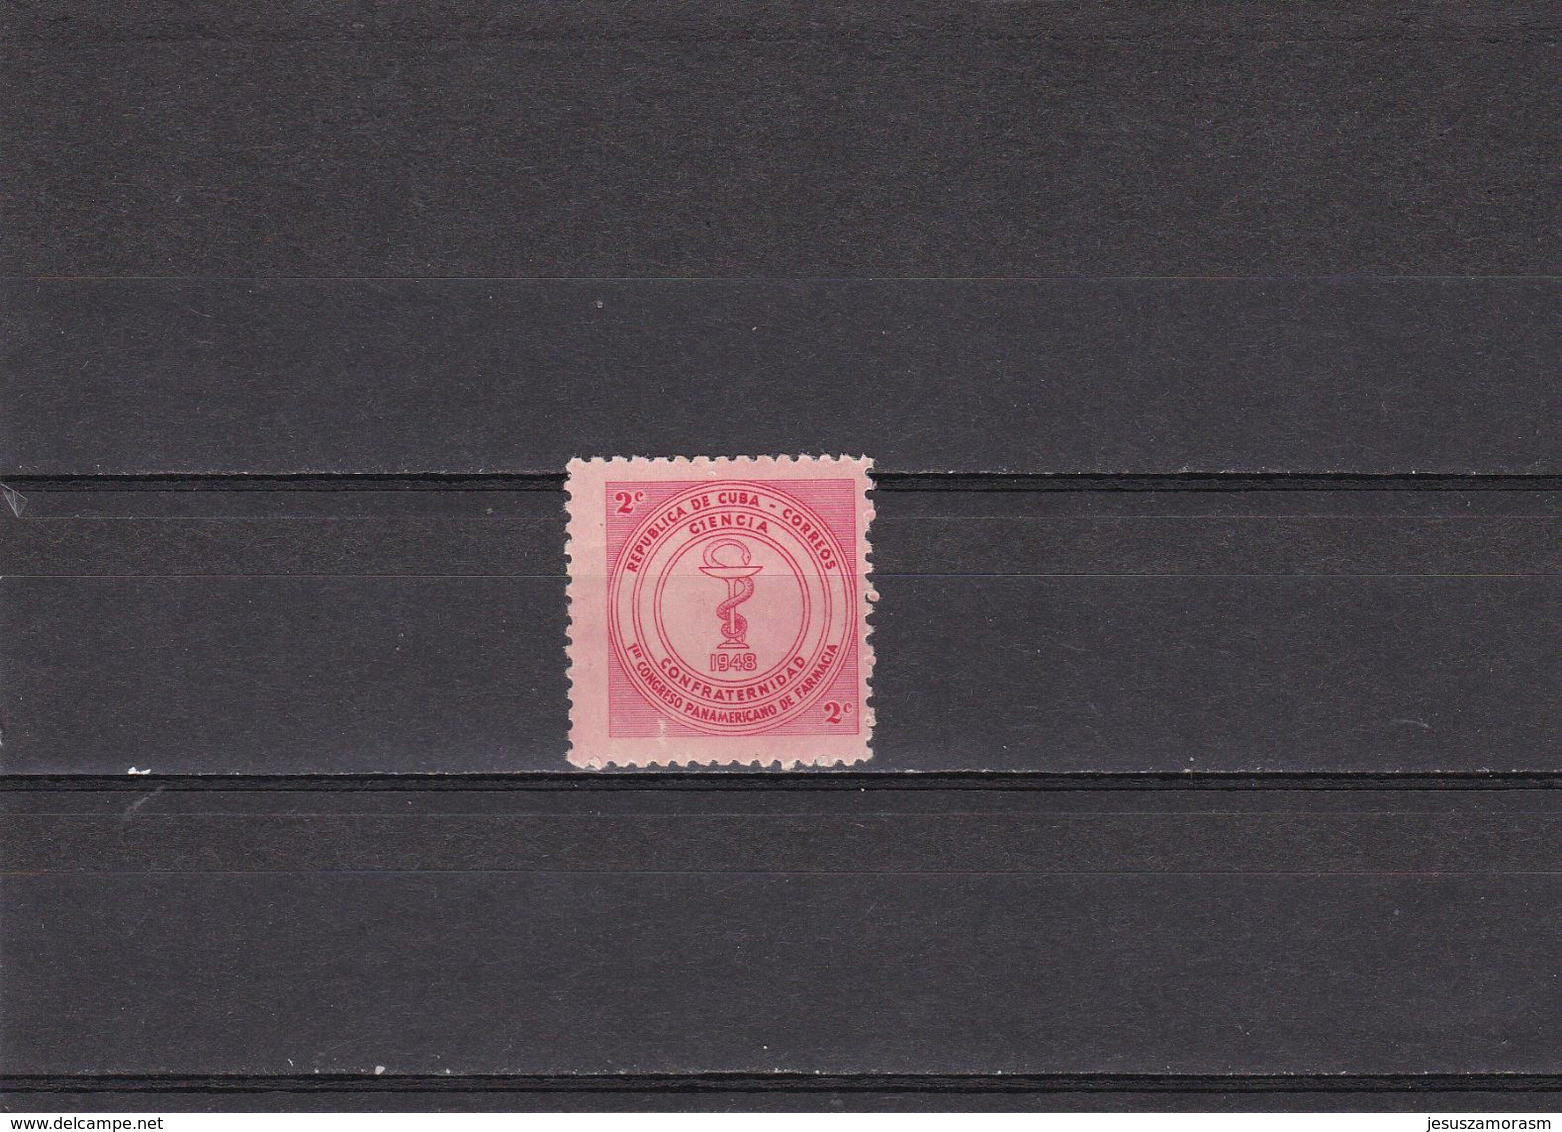 Cuba Nº 317 Con Charnela - Unused Stamps